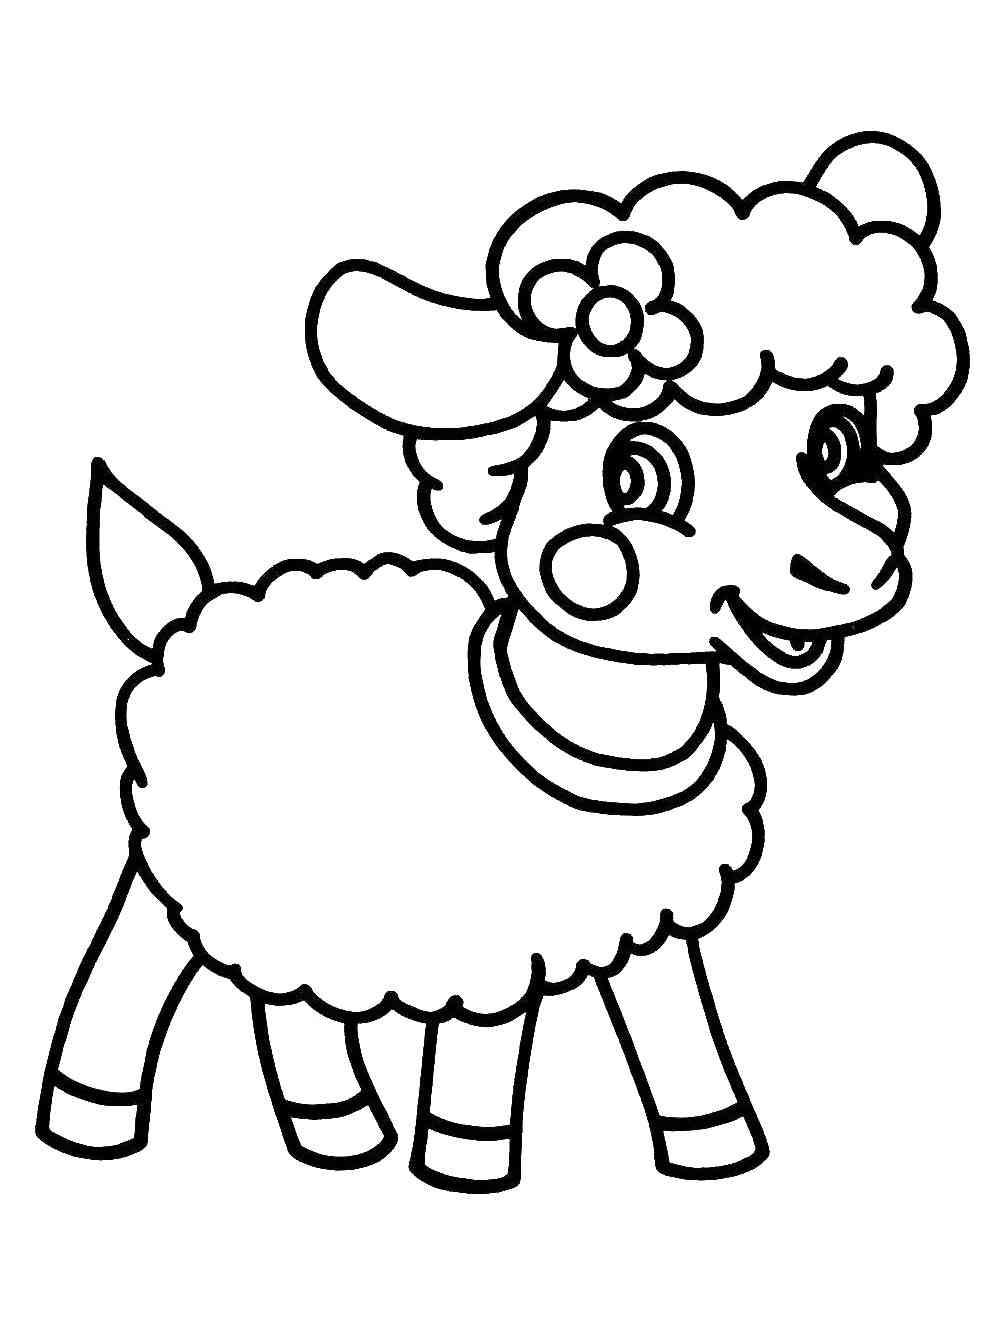 Beautiful Sheep coloring page